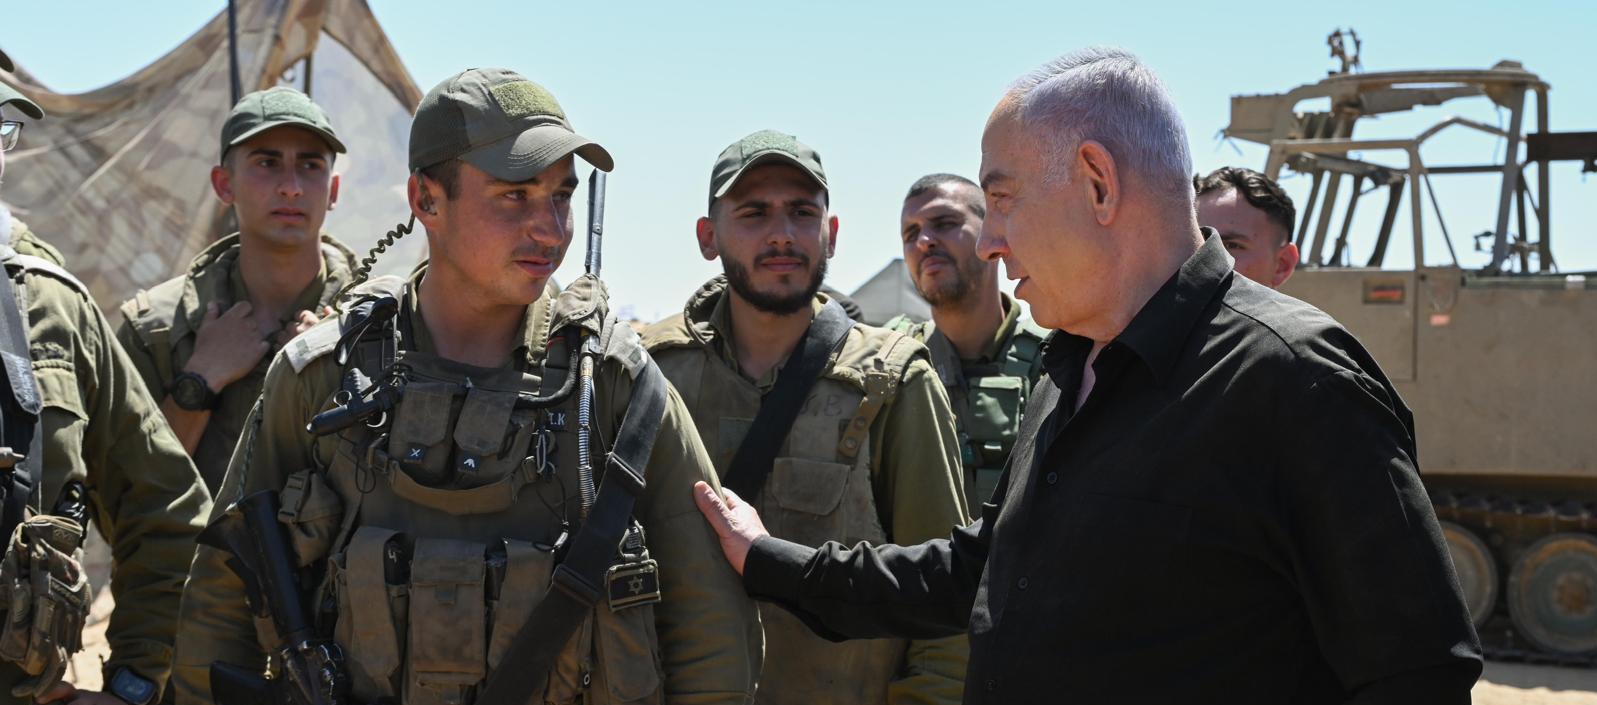 El primer ministro israelí, Benjamín Netanyahu.